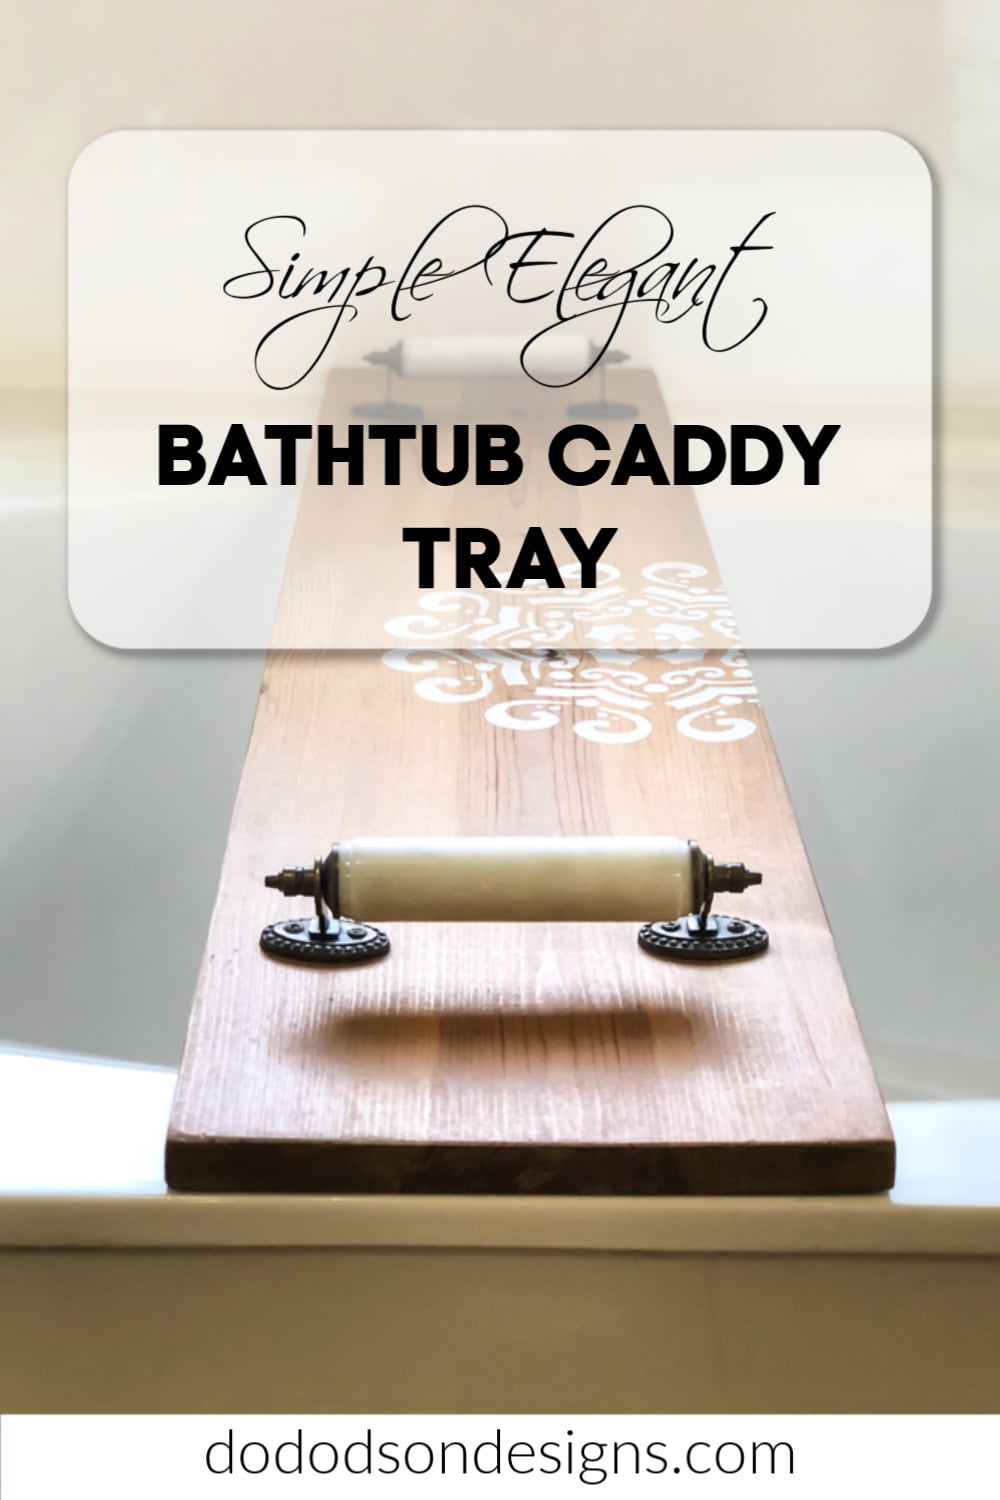 https://www.dododsondesigns.com/wp-content/uploads/2017/10/bathtub-caddy-tray-.jpg